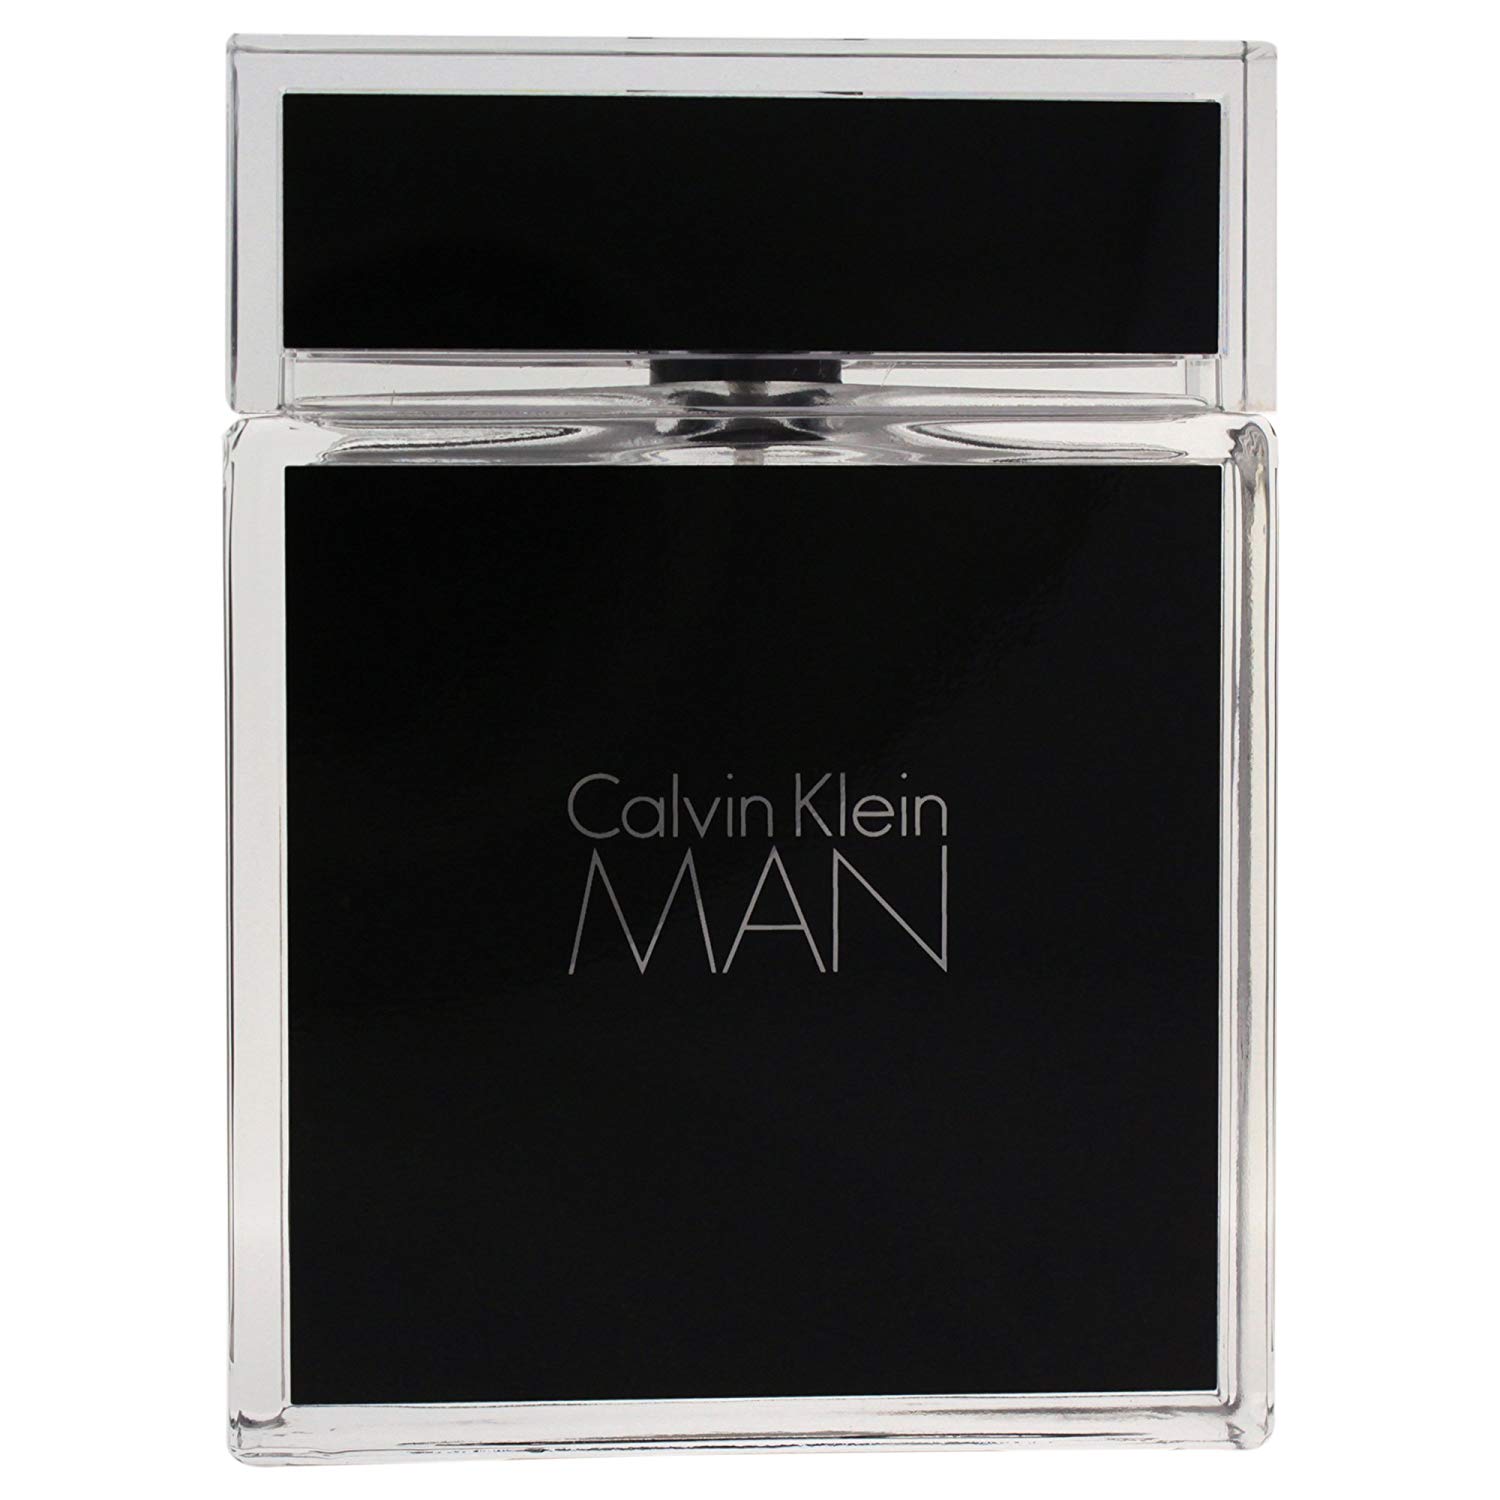 Calvin Klein Man Cologne – 100ml – Nortram Retail